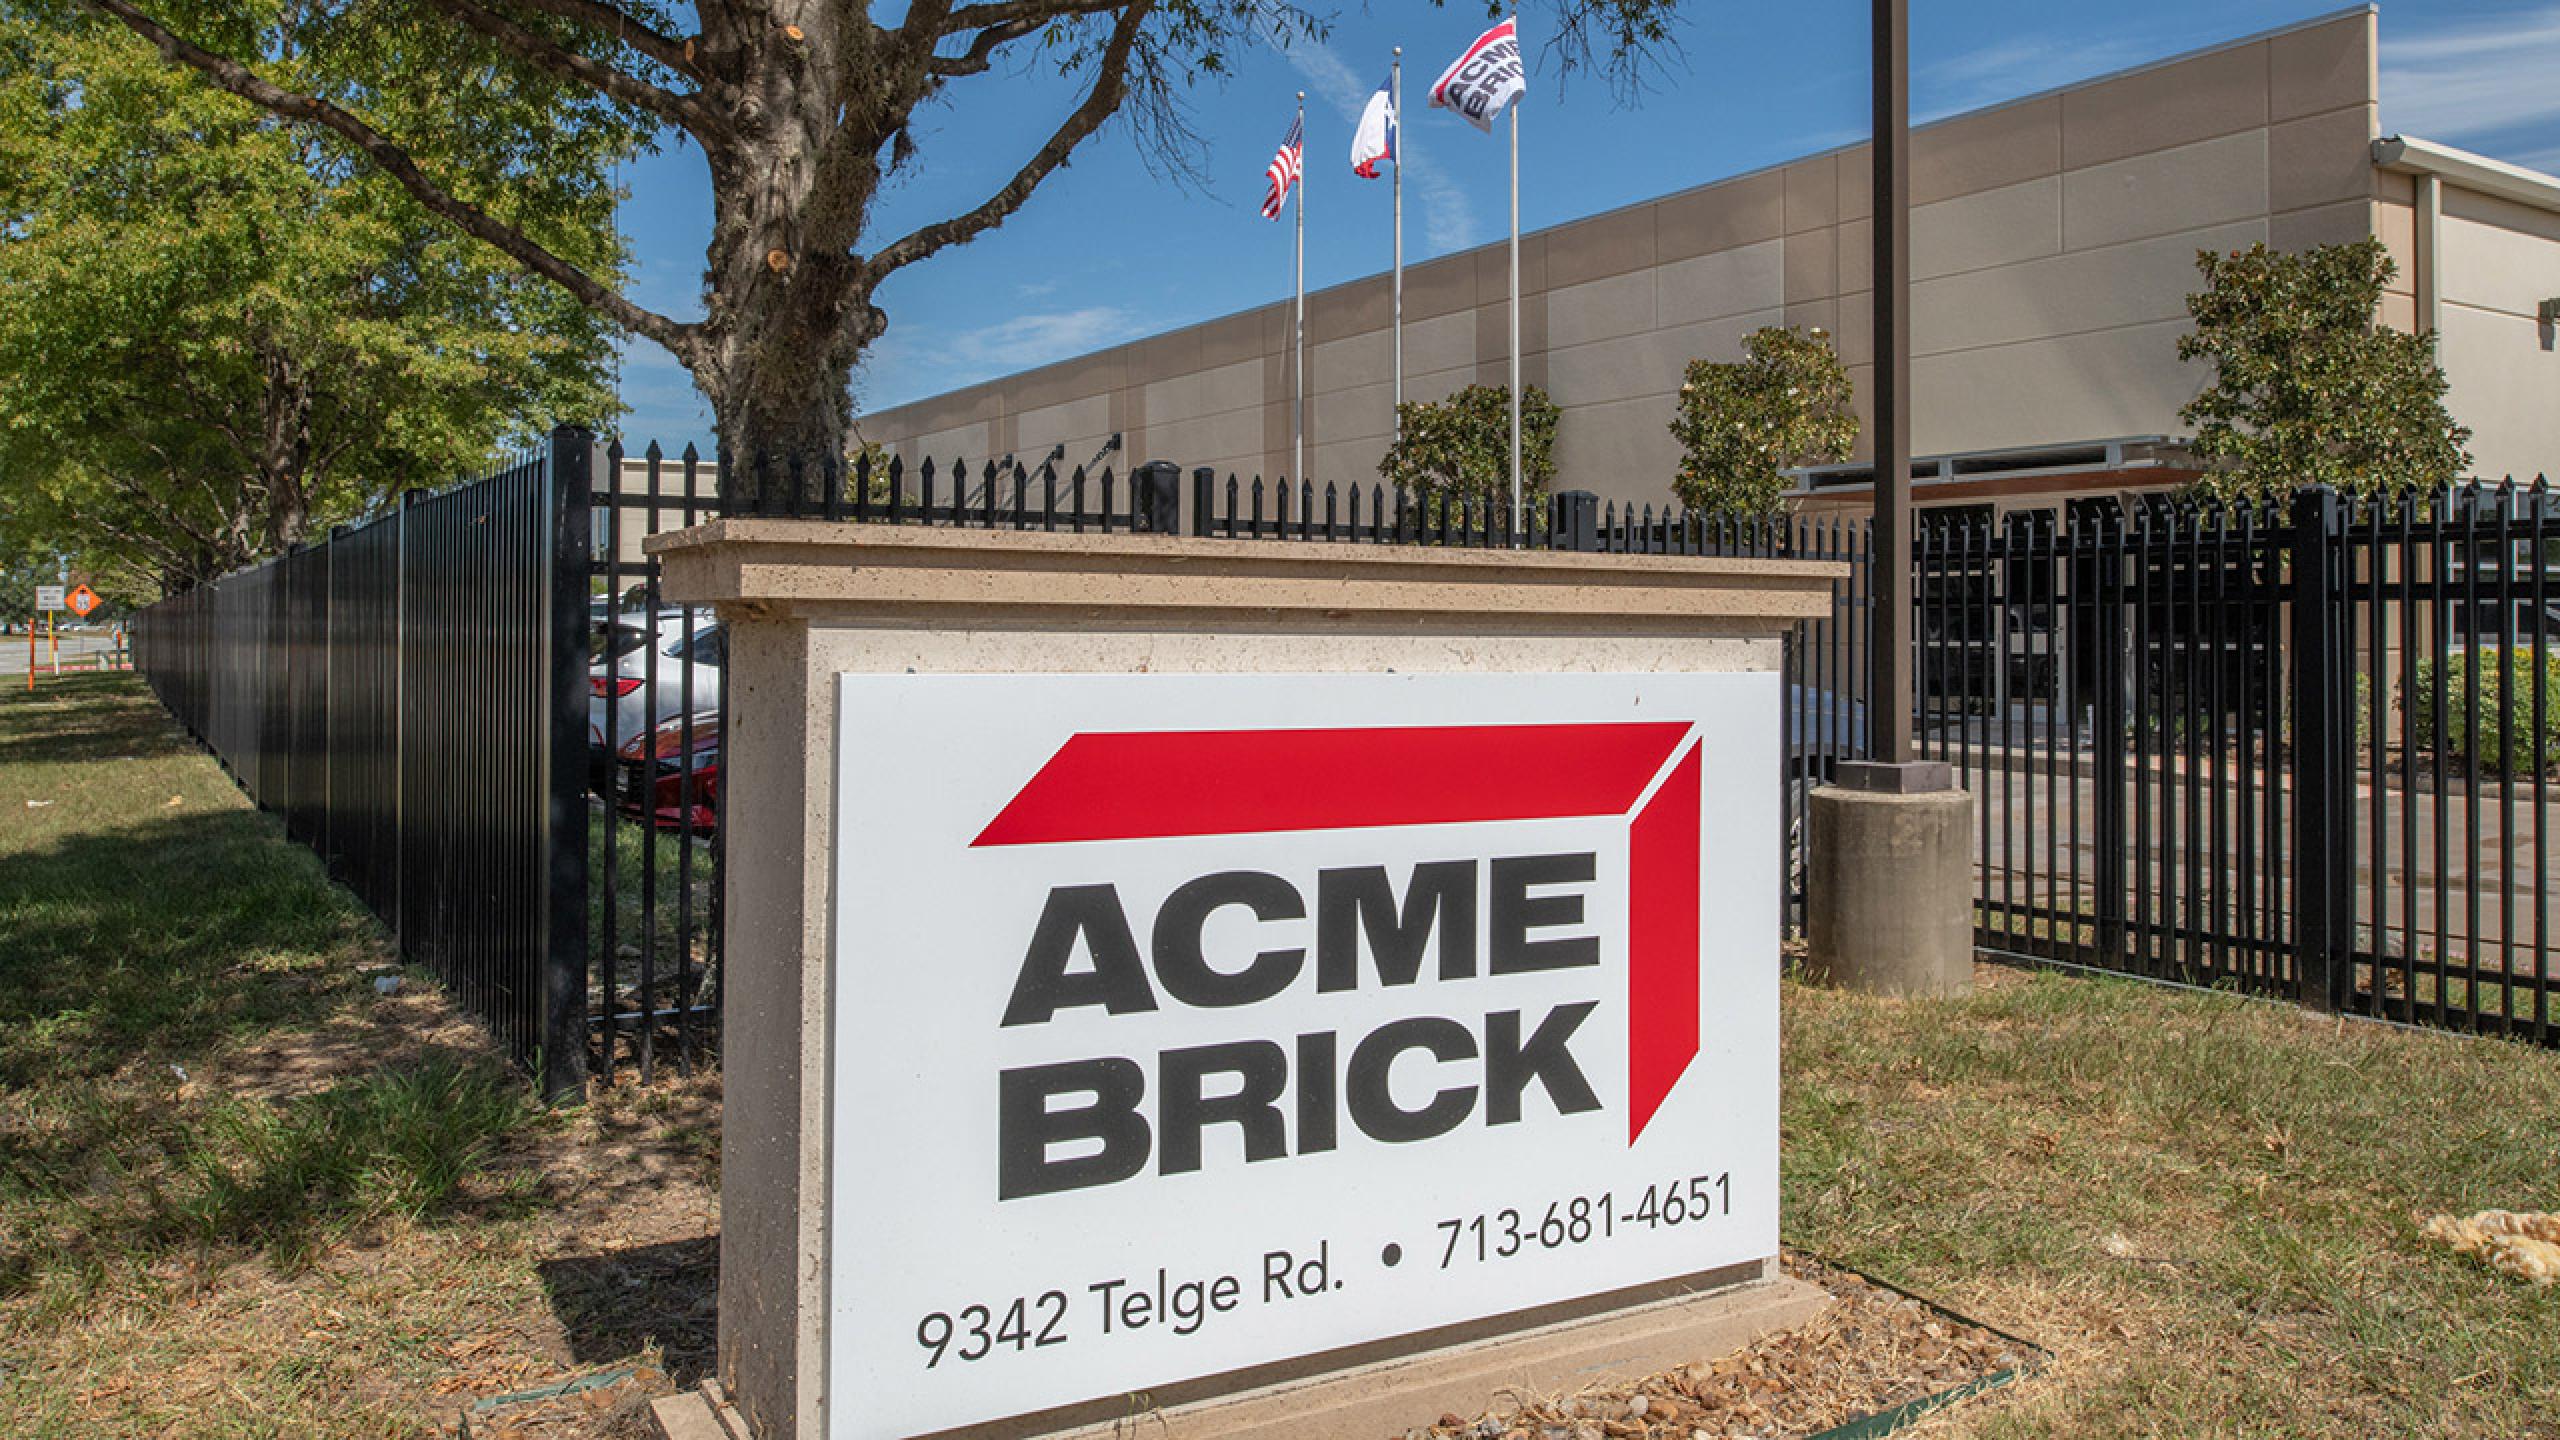 Acme Brick, Tile and Stone